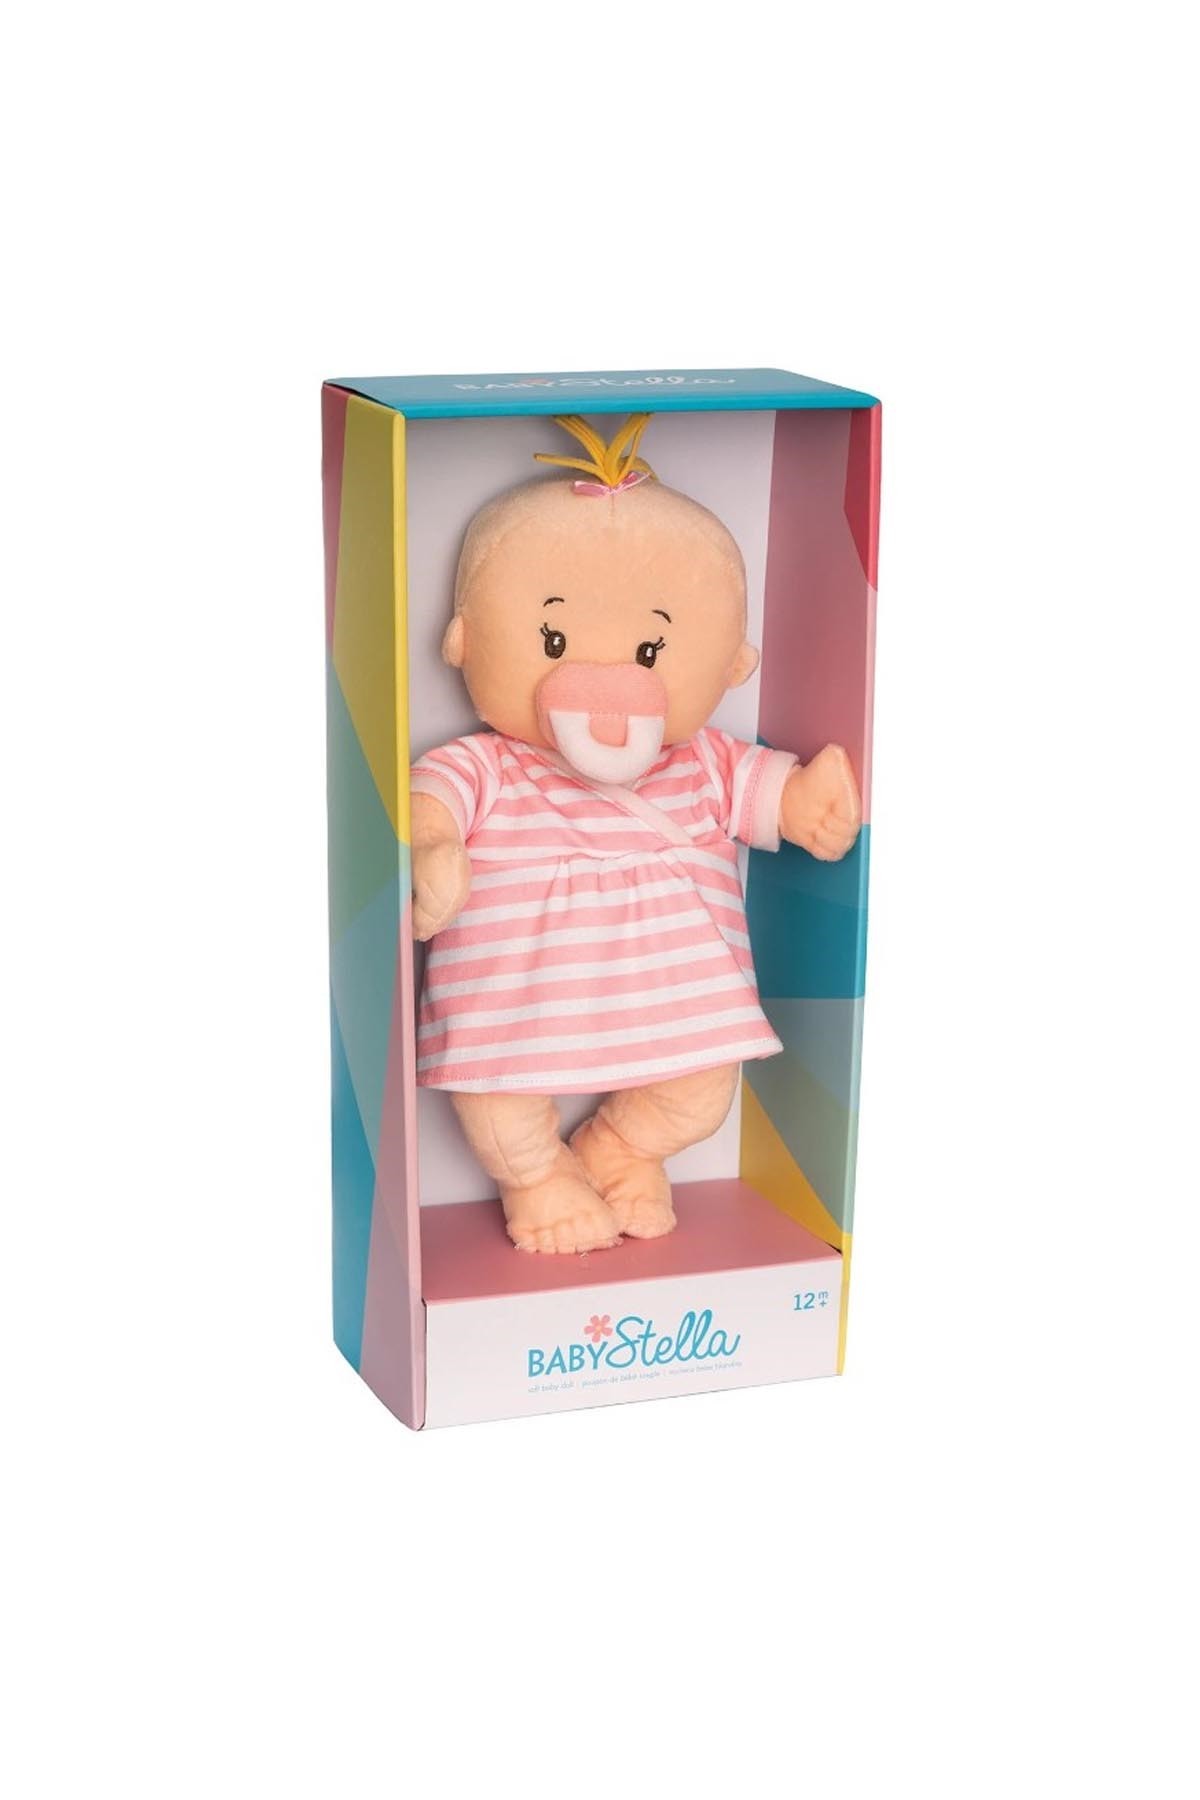 Manhattan Toy Baby Stella Oyuncak Kız Bebek